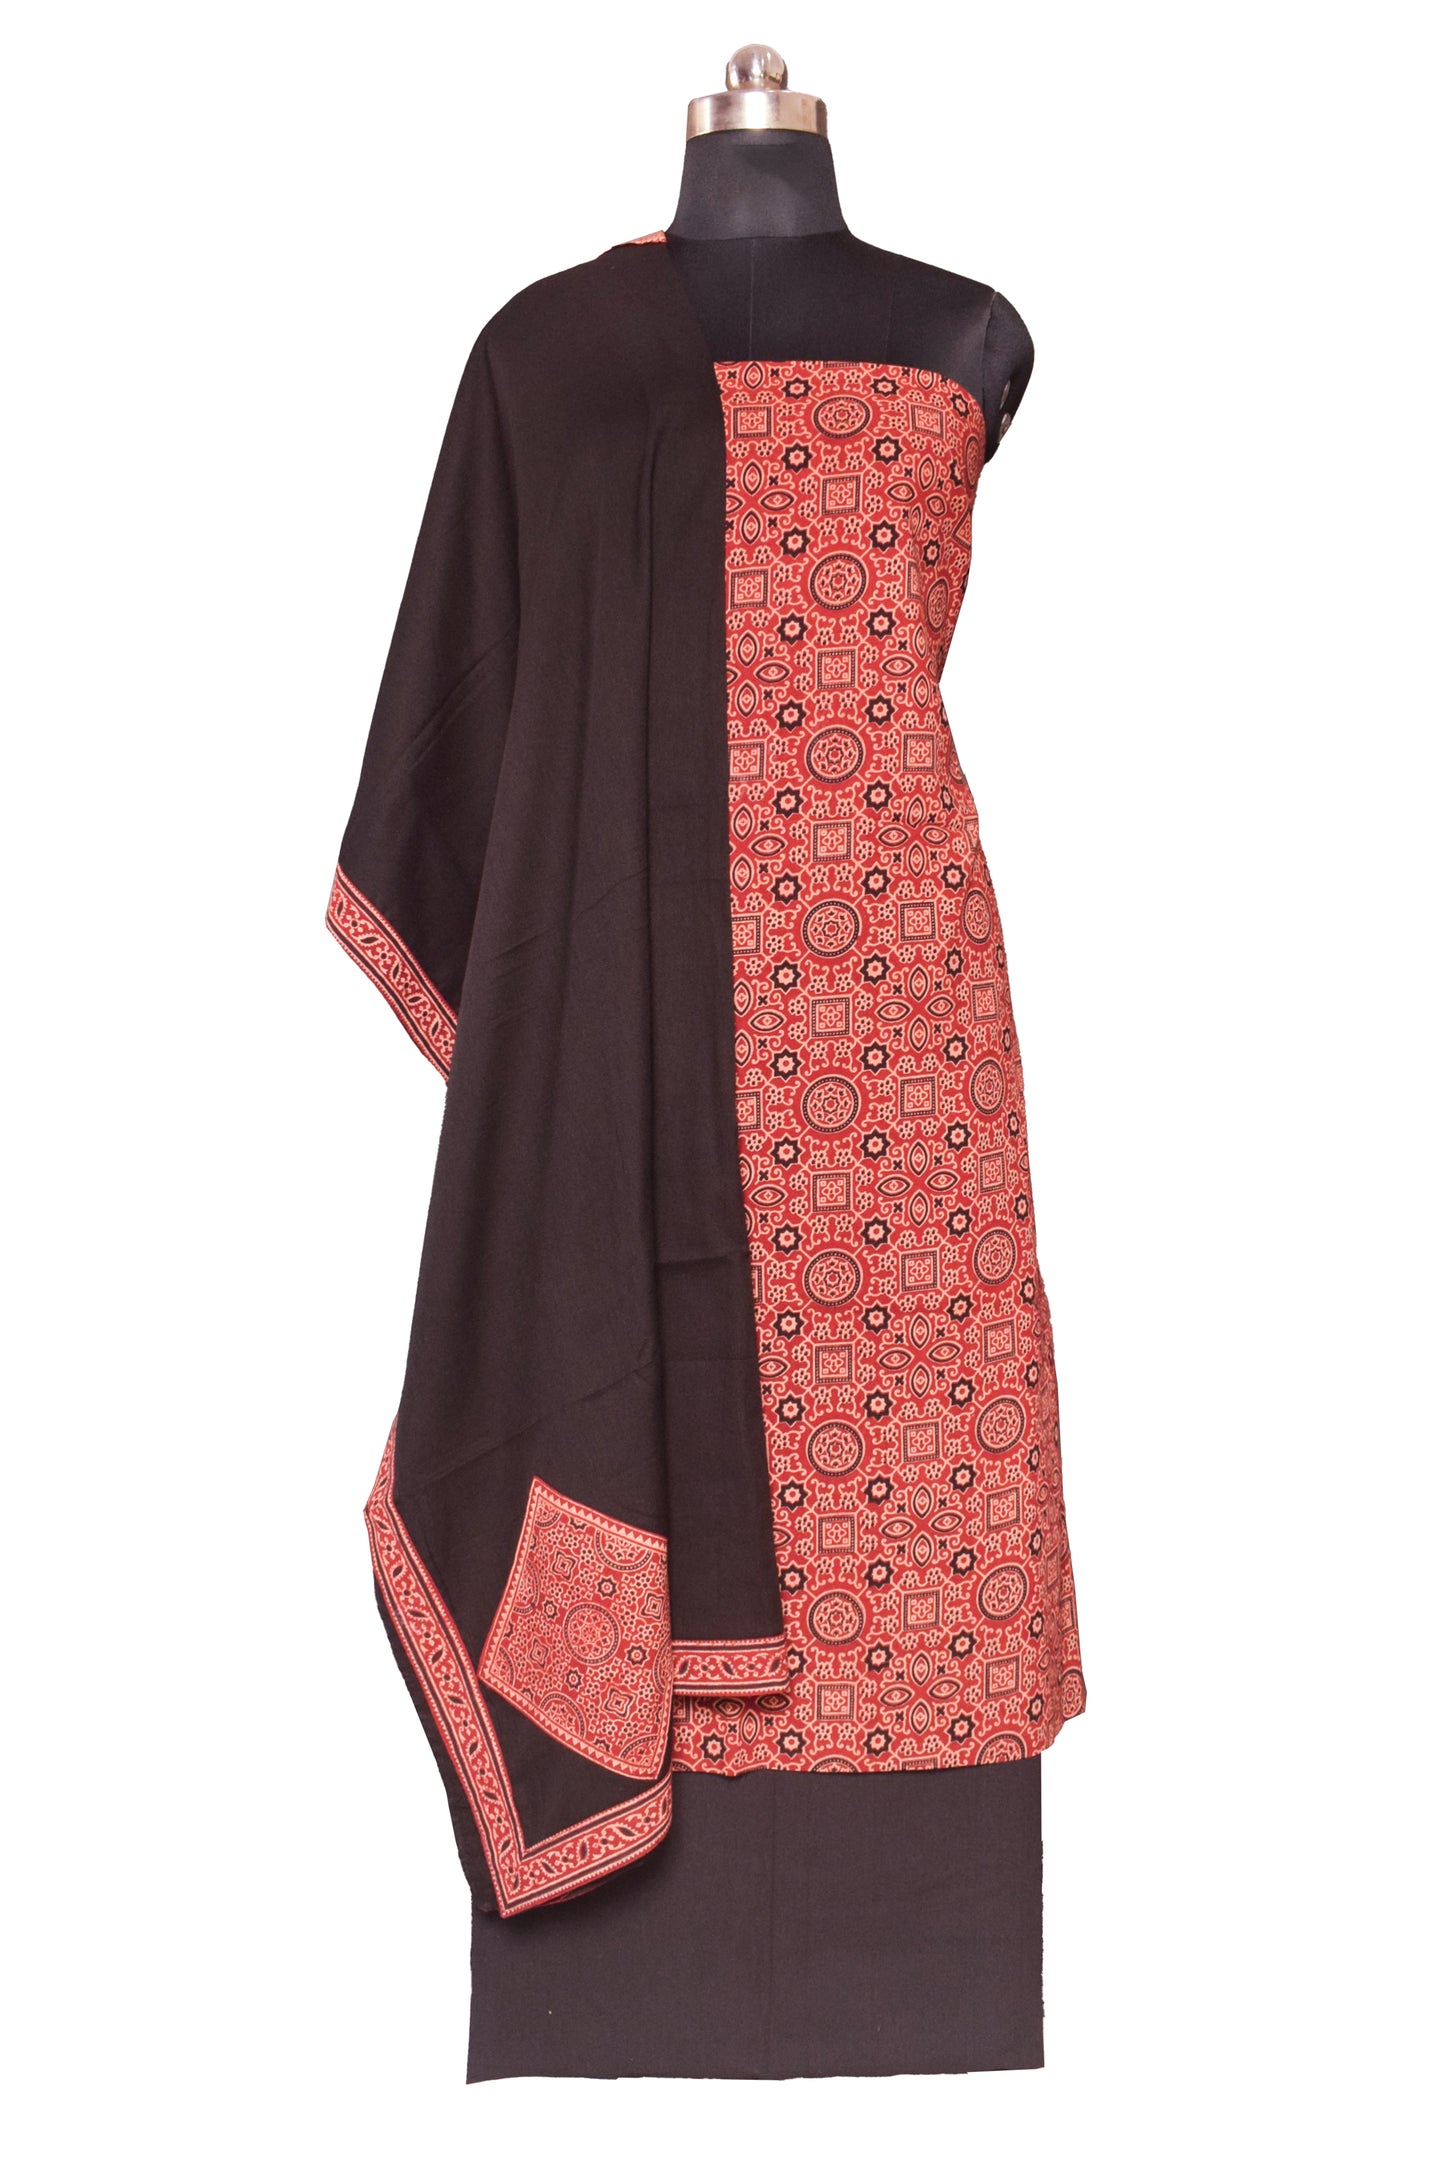 Ajrakh Cotton Natural Dye Screen Print Hand Printed Dress Material  with Applique Work Dupatta  - 2.5  Mt Top    -  SKU : RM13902B